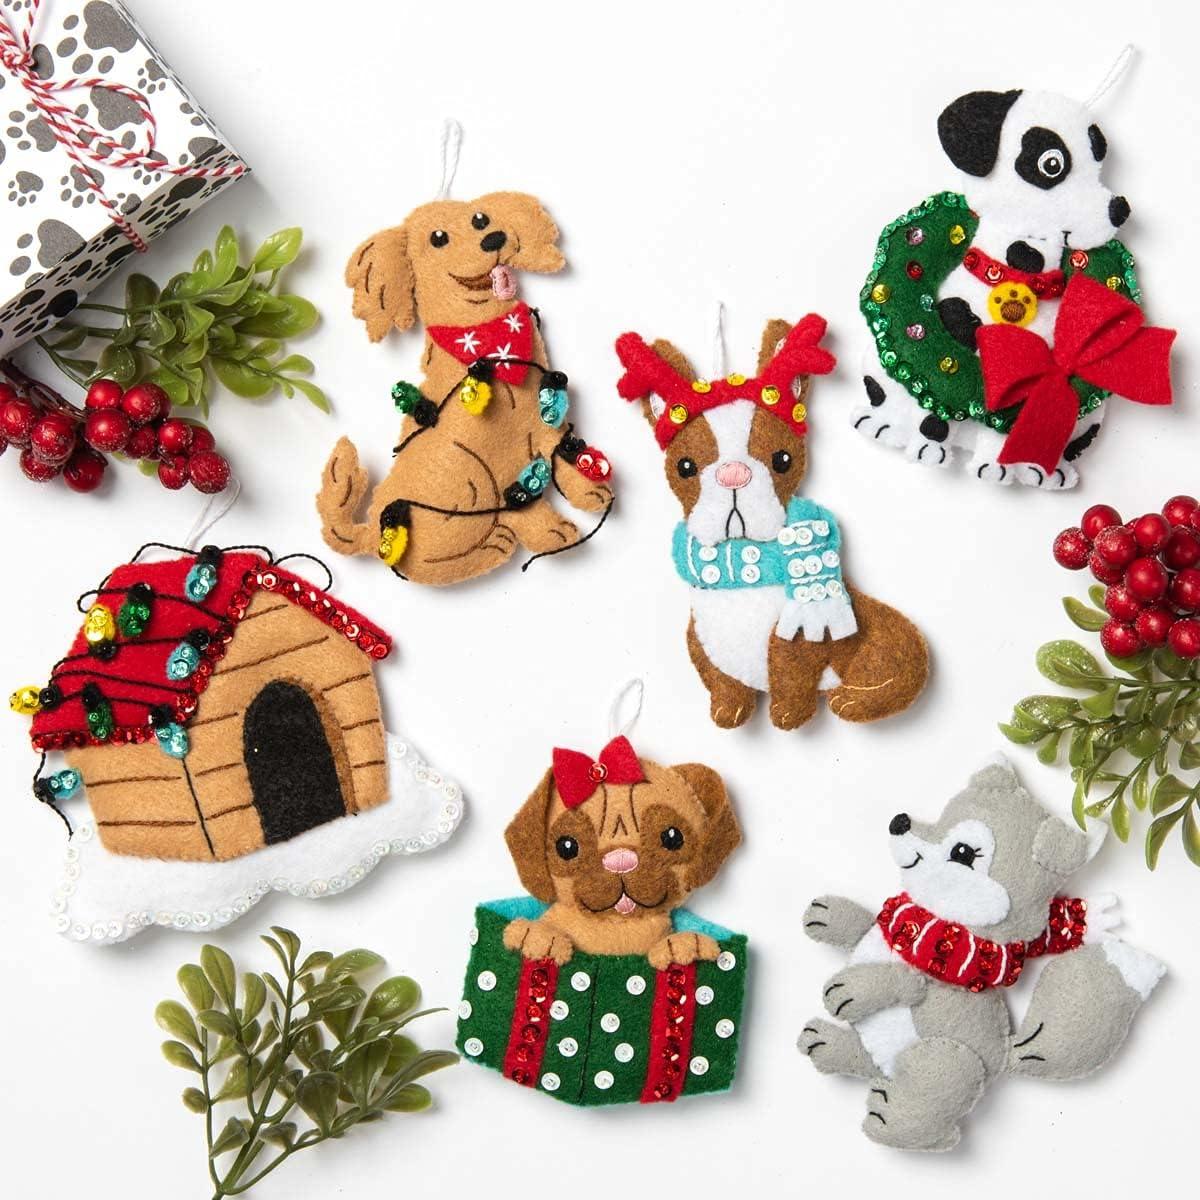 Bunny Puppies Felt Ornament kit from Bucilla, set of 3